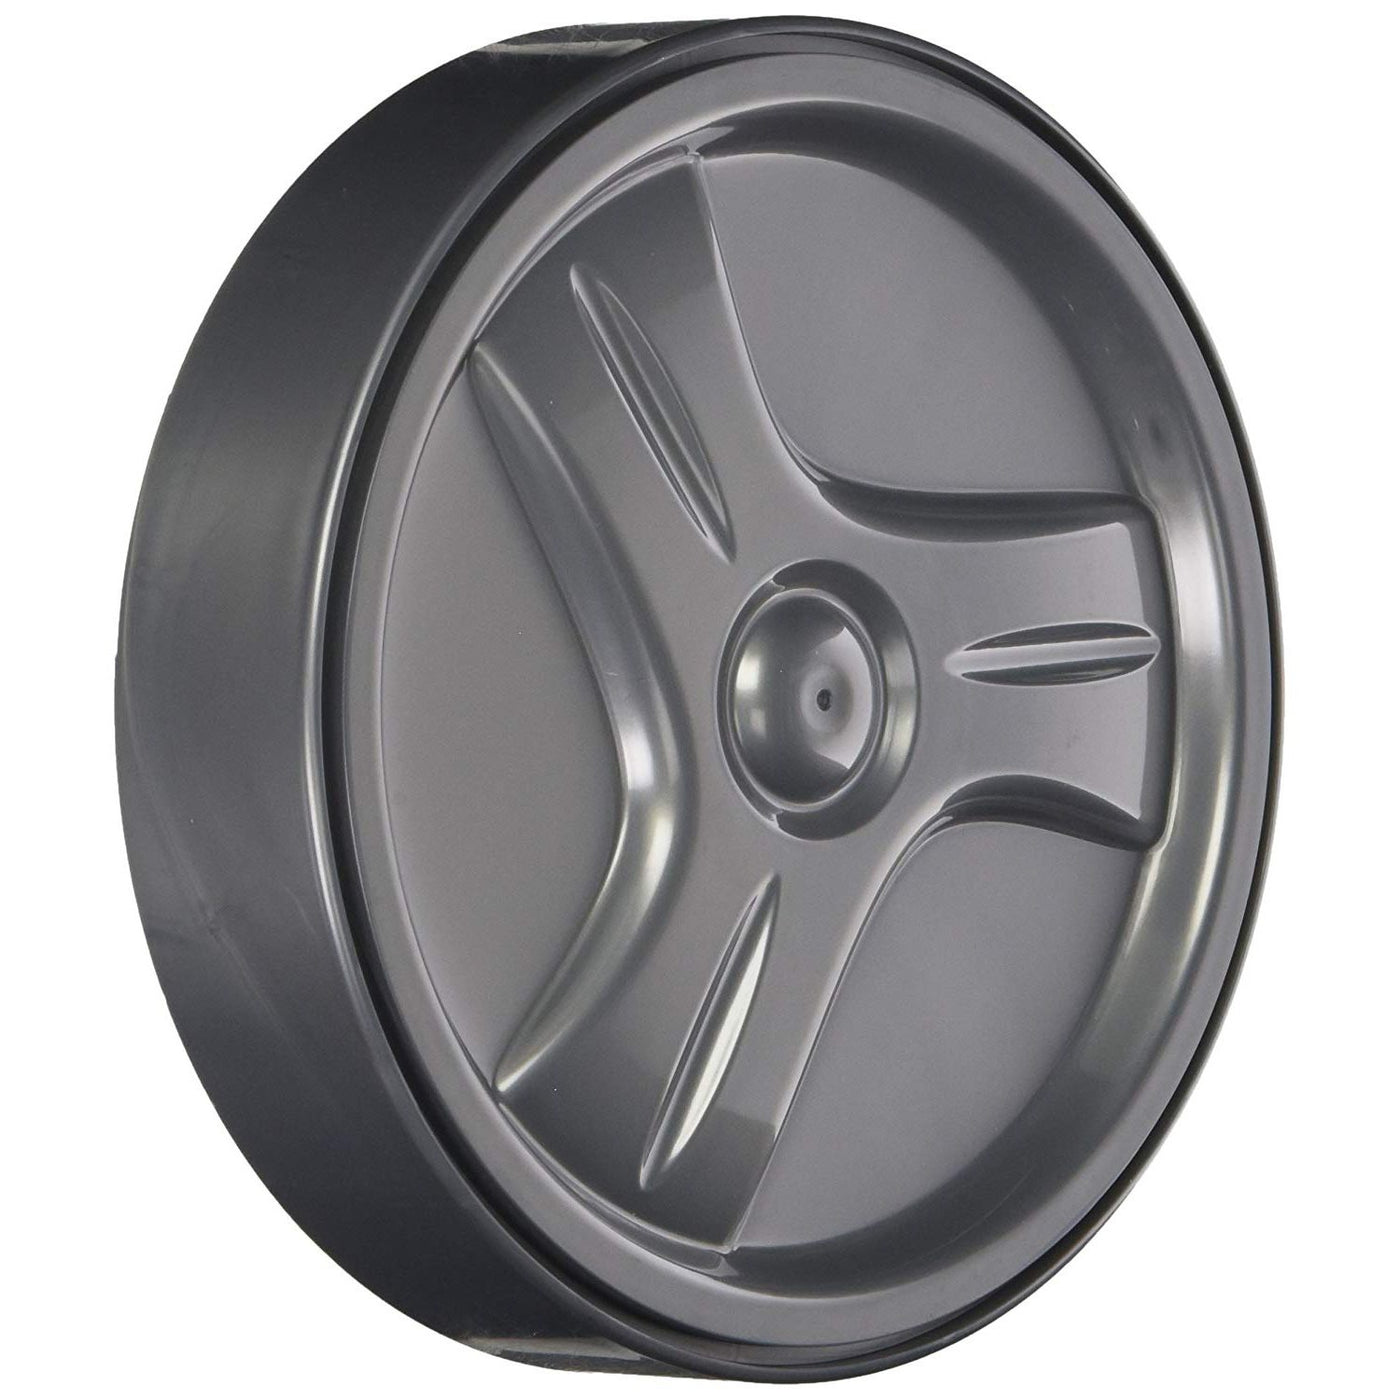 Polaris Rear Wheel with Tire R0529100